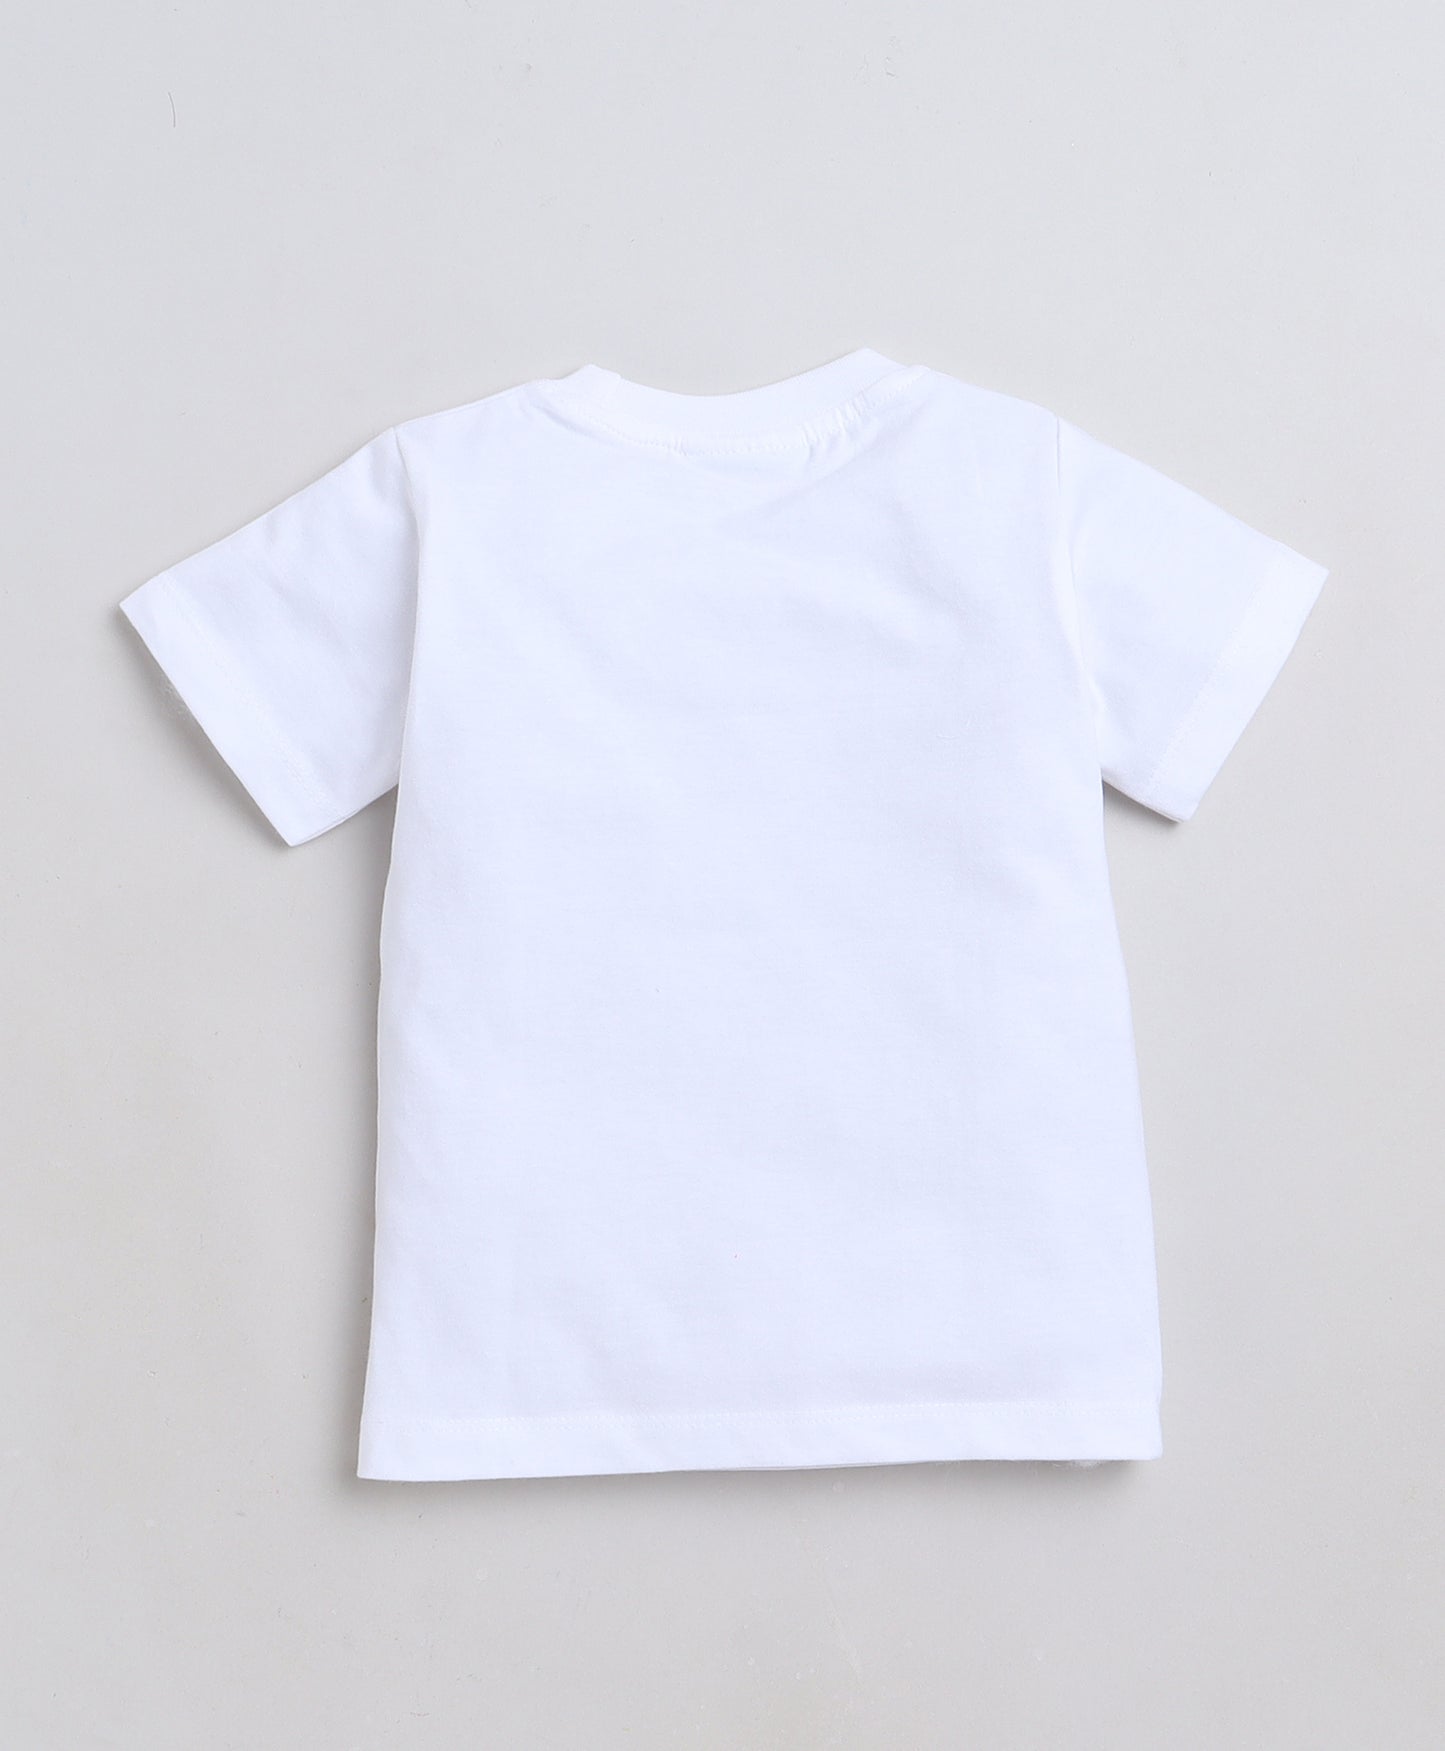 Avcado Print T-shirt and Pyjama- White and Blue